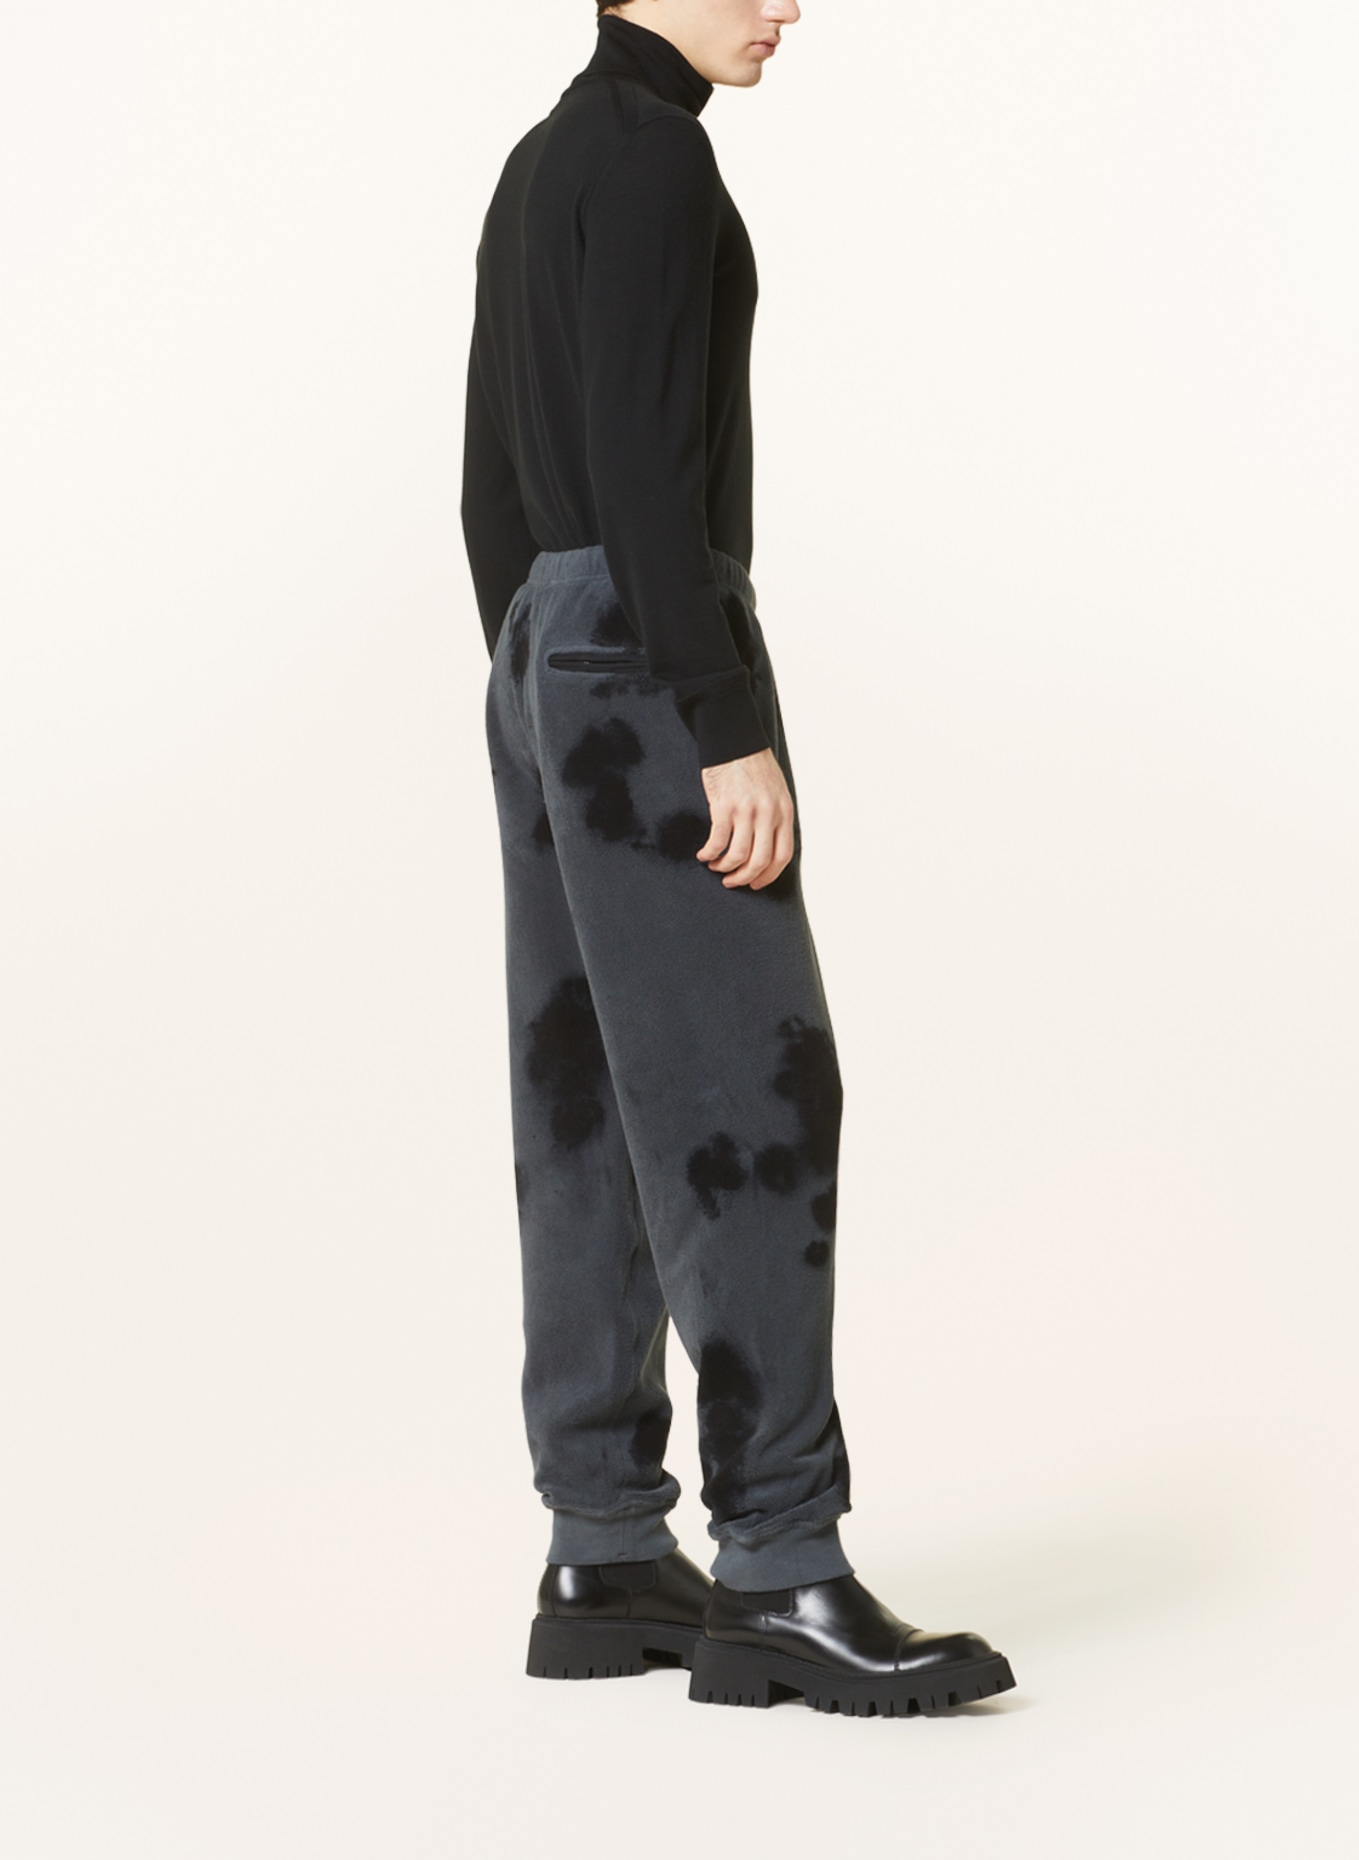 STONE ISLAND Fleece pants in jogger style, Color: DARK GRAY/ BLACK (Image 4)